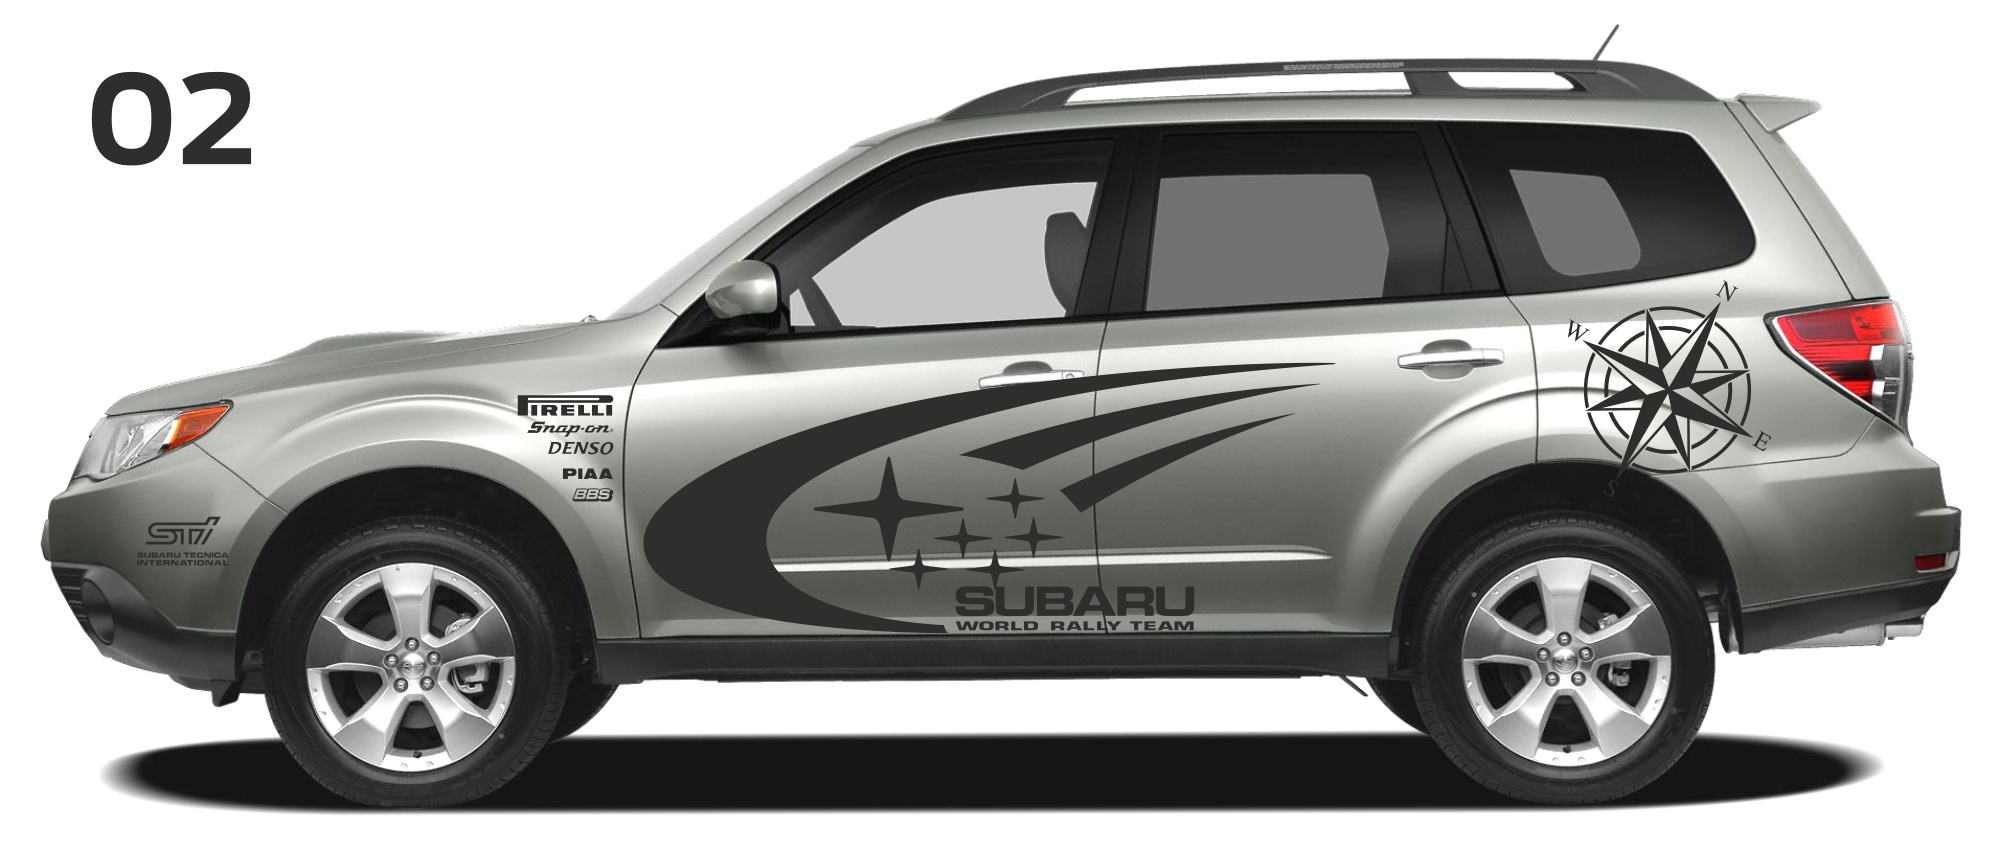 Naklejki na Subaru Forester naklejki decals stripes sticker aufkleber nalepky samolepky tuning